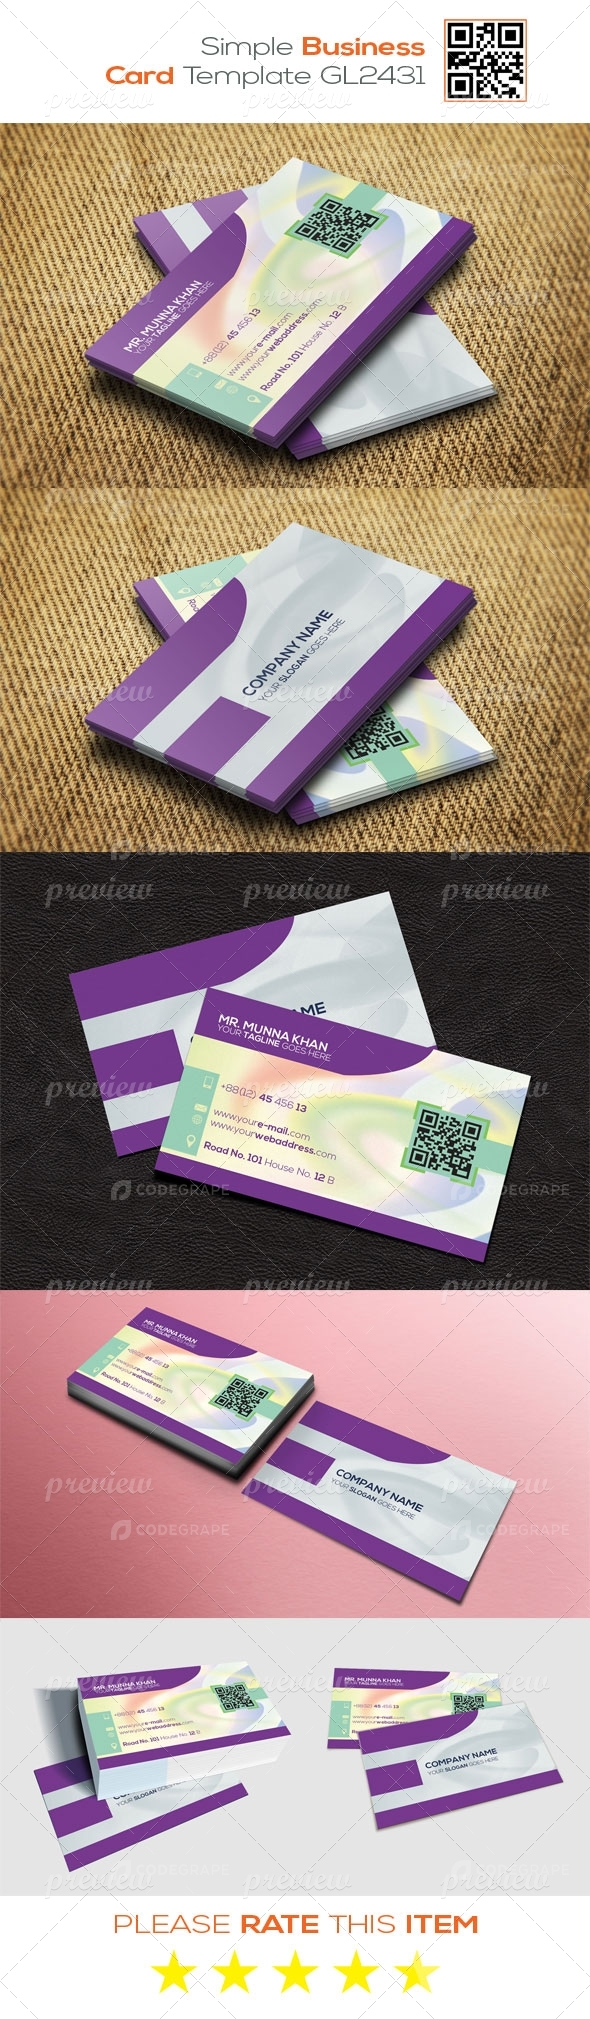 Simple Business Card Template GL2431